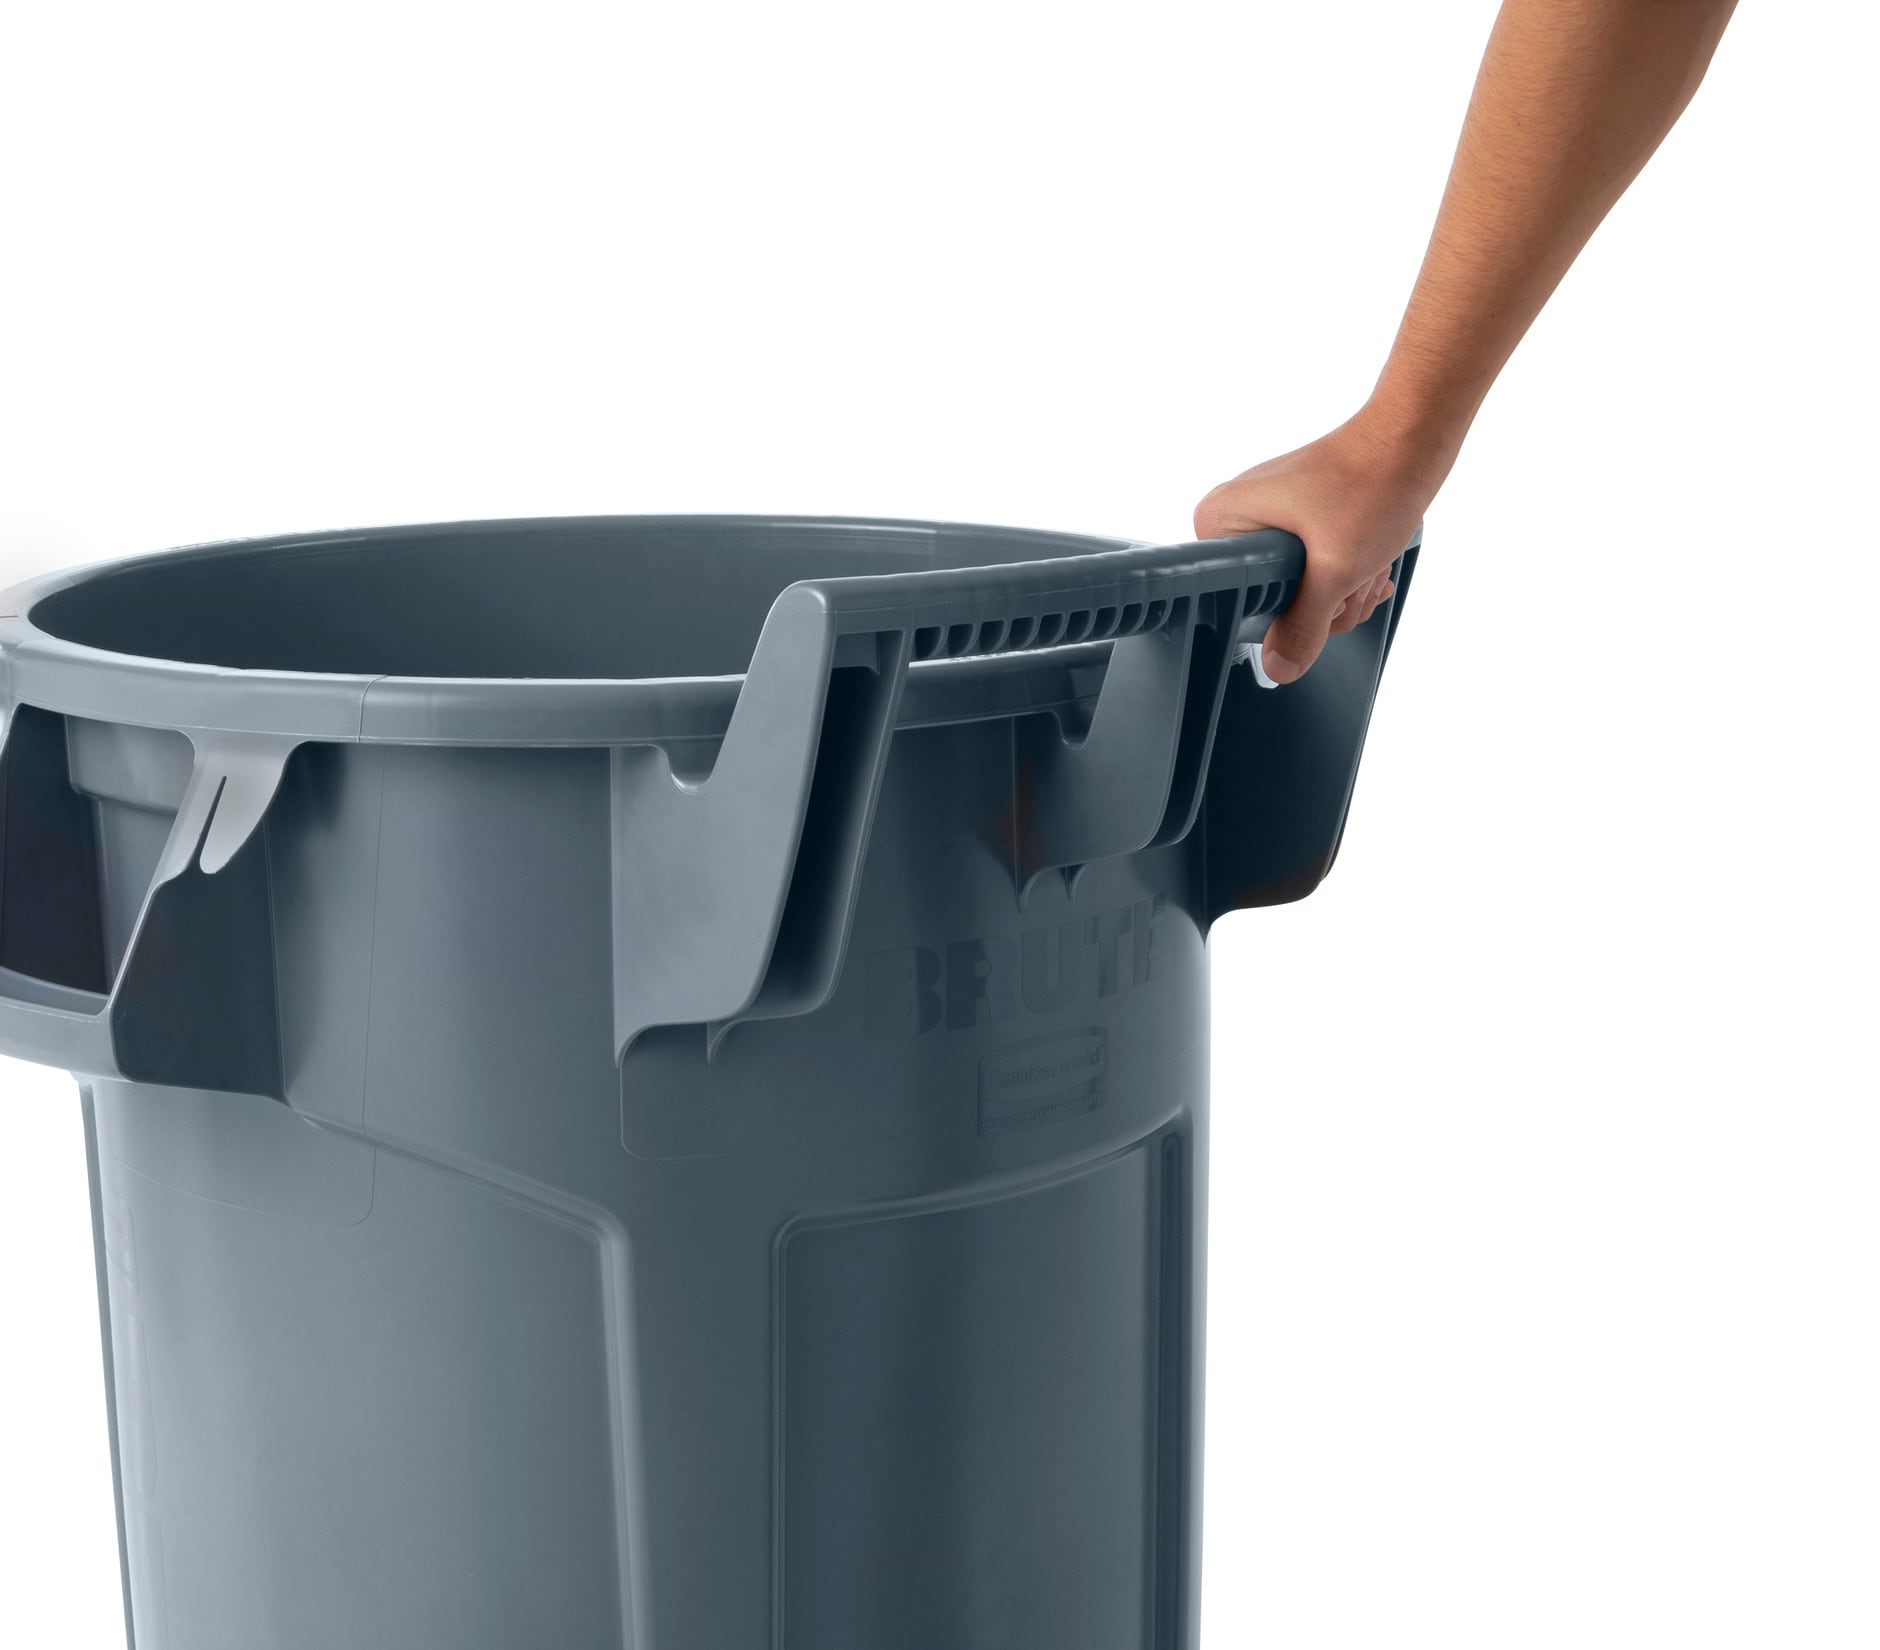 Toughbag Rubbermaid Compatible 44 Gallon Trash Bag 100 Garbage Bags Black